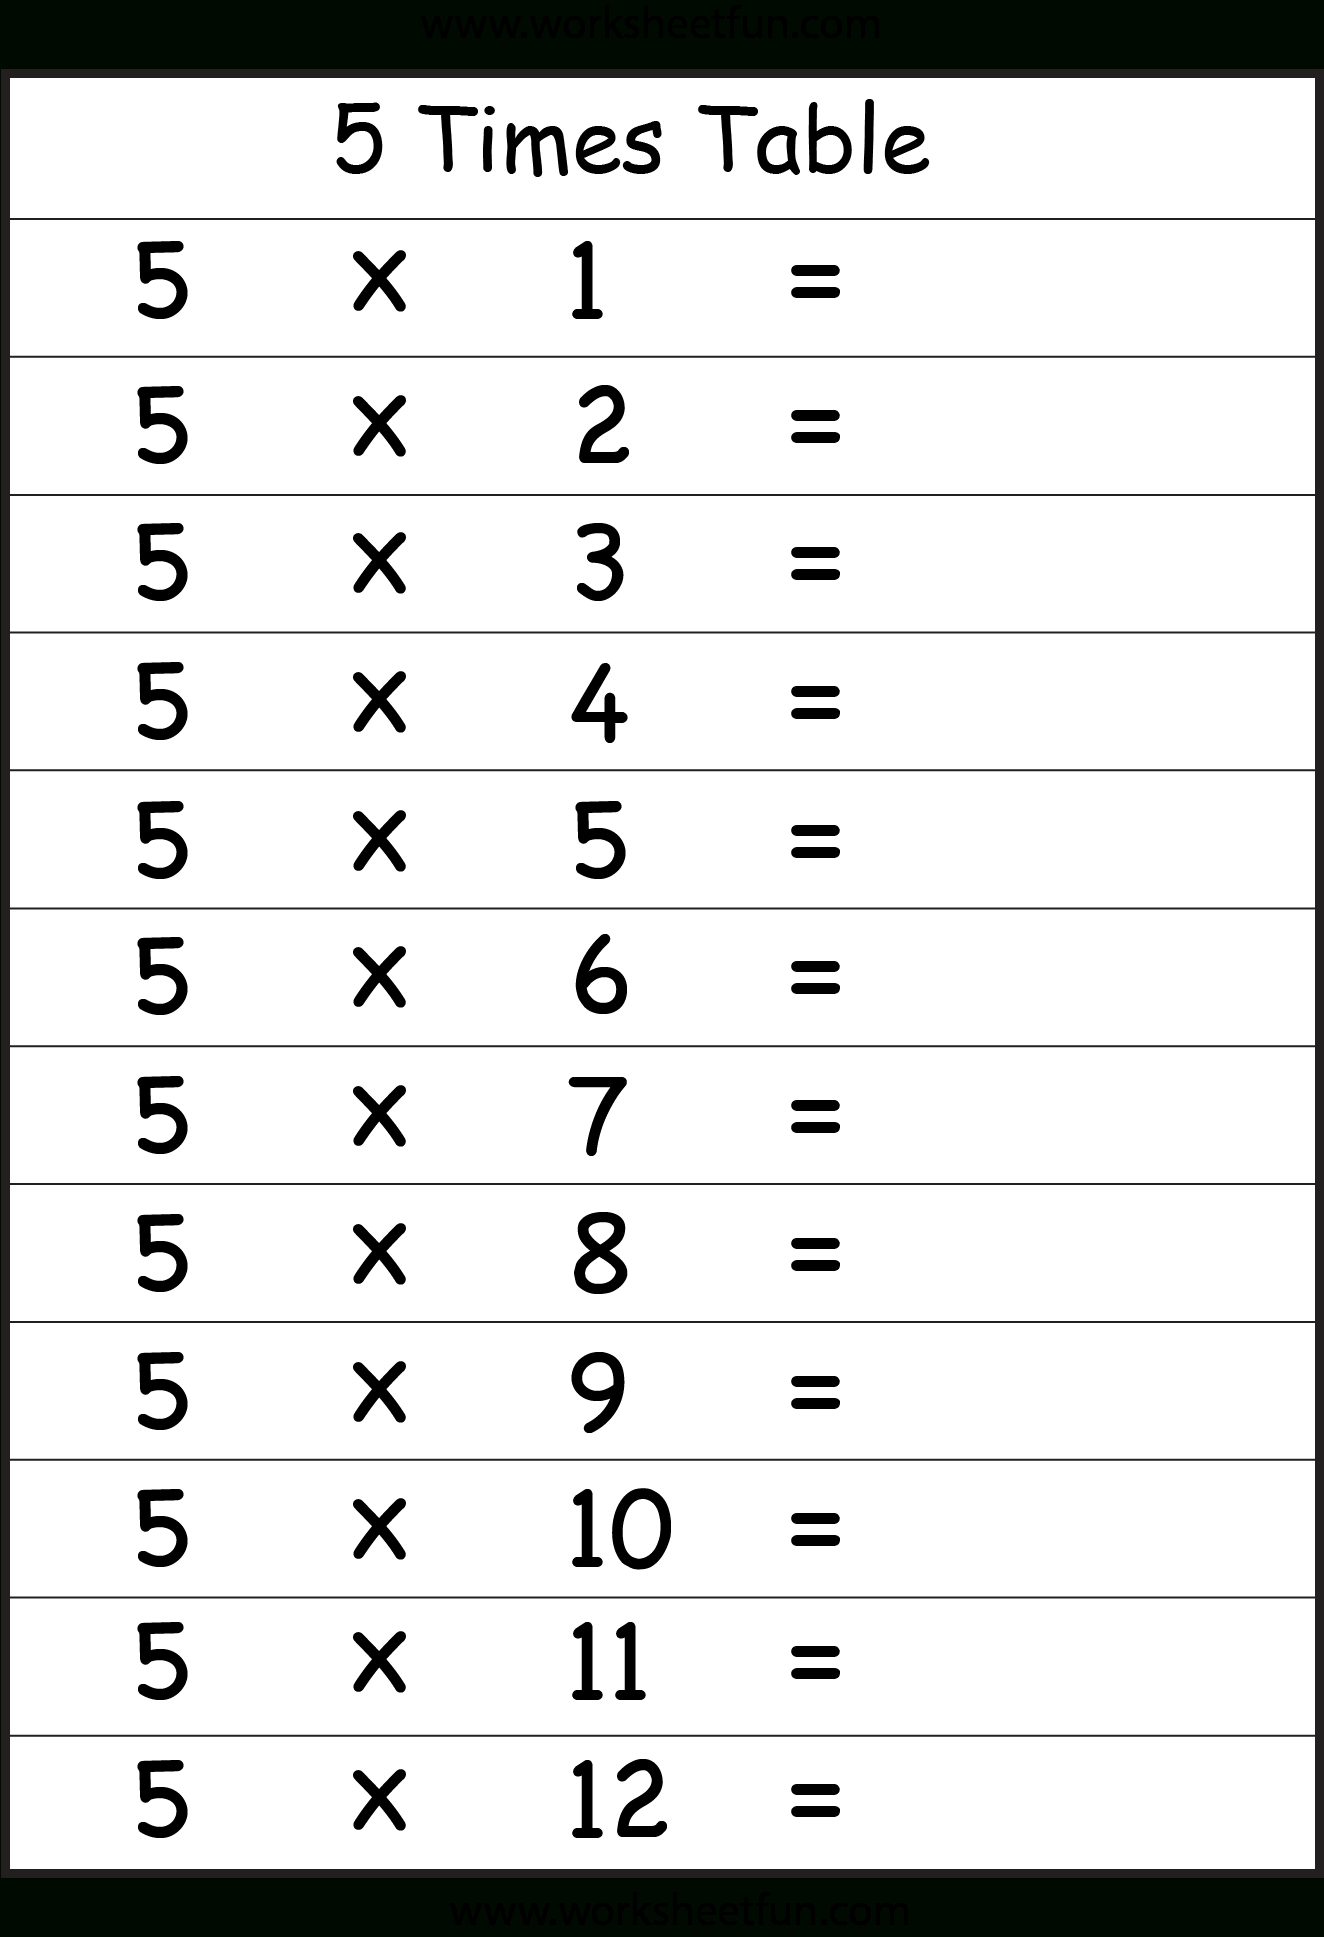 Multiplication Times Tables Worksheets – 2, 3, 4, 5, 6, 7, 8 regarding Multiplication Worksheets 5 Times Tables